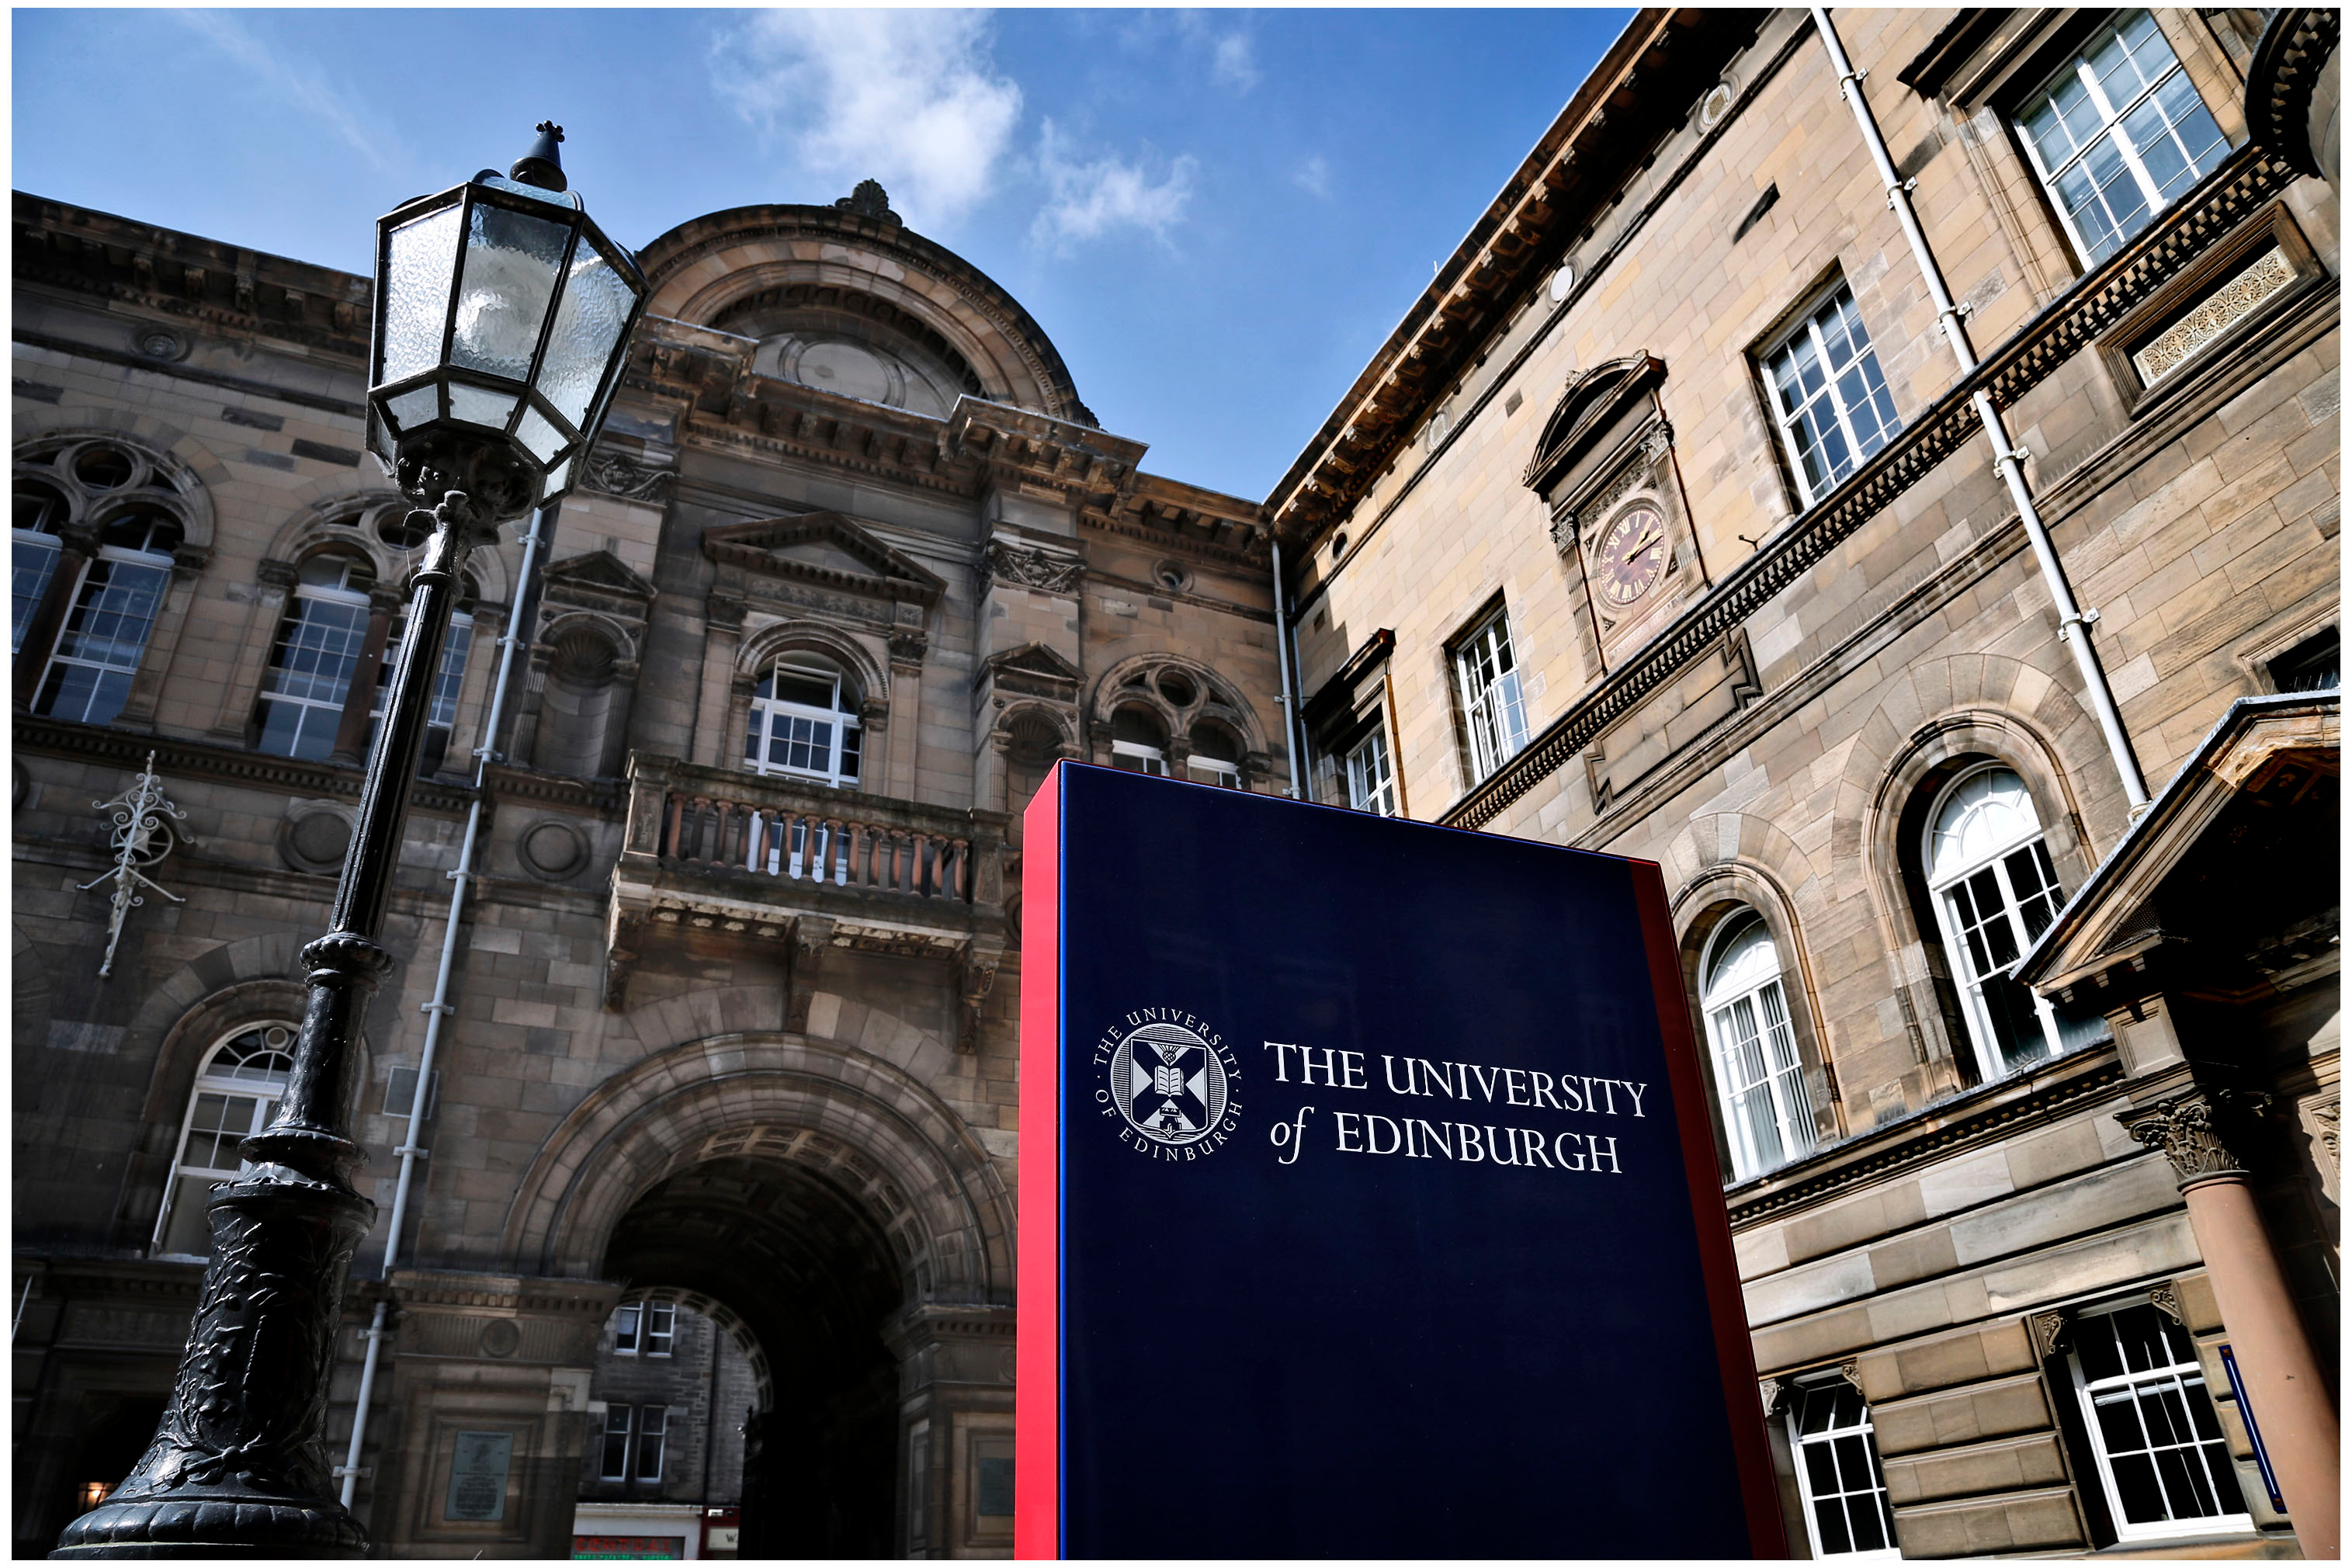 Hero image: University of Edinburgh